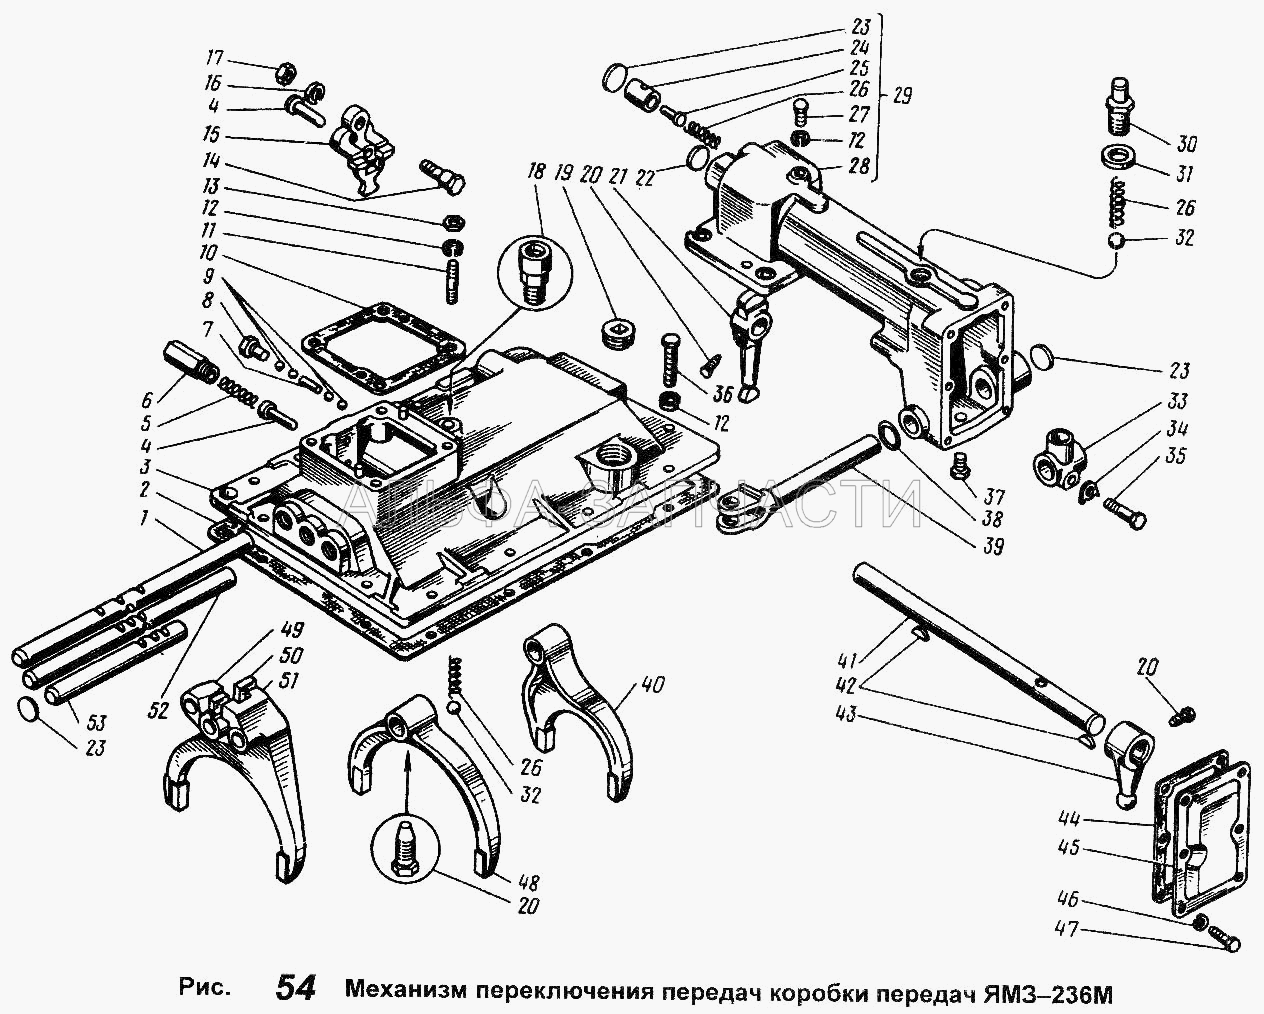 Механизм переключения передач коробки передач ЯМЗ-236М (310213-П29 Болт) 